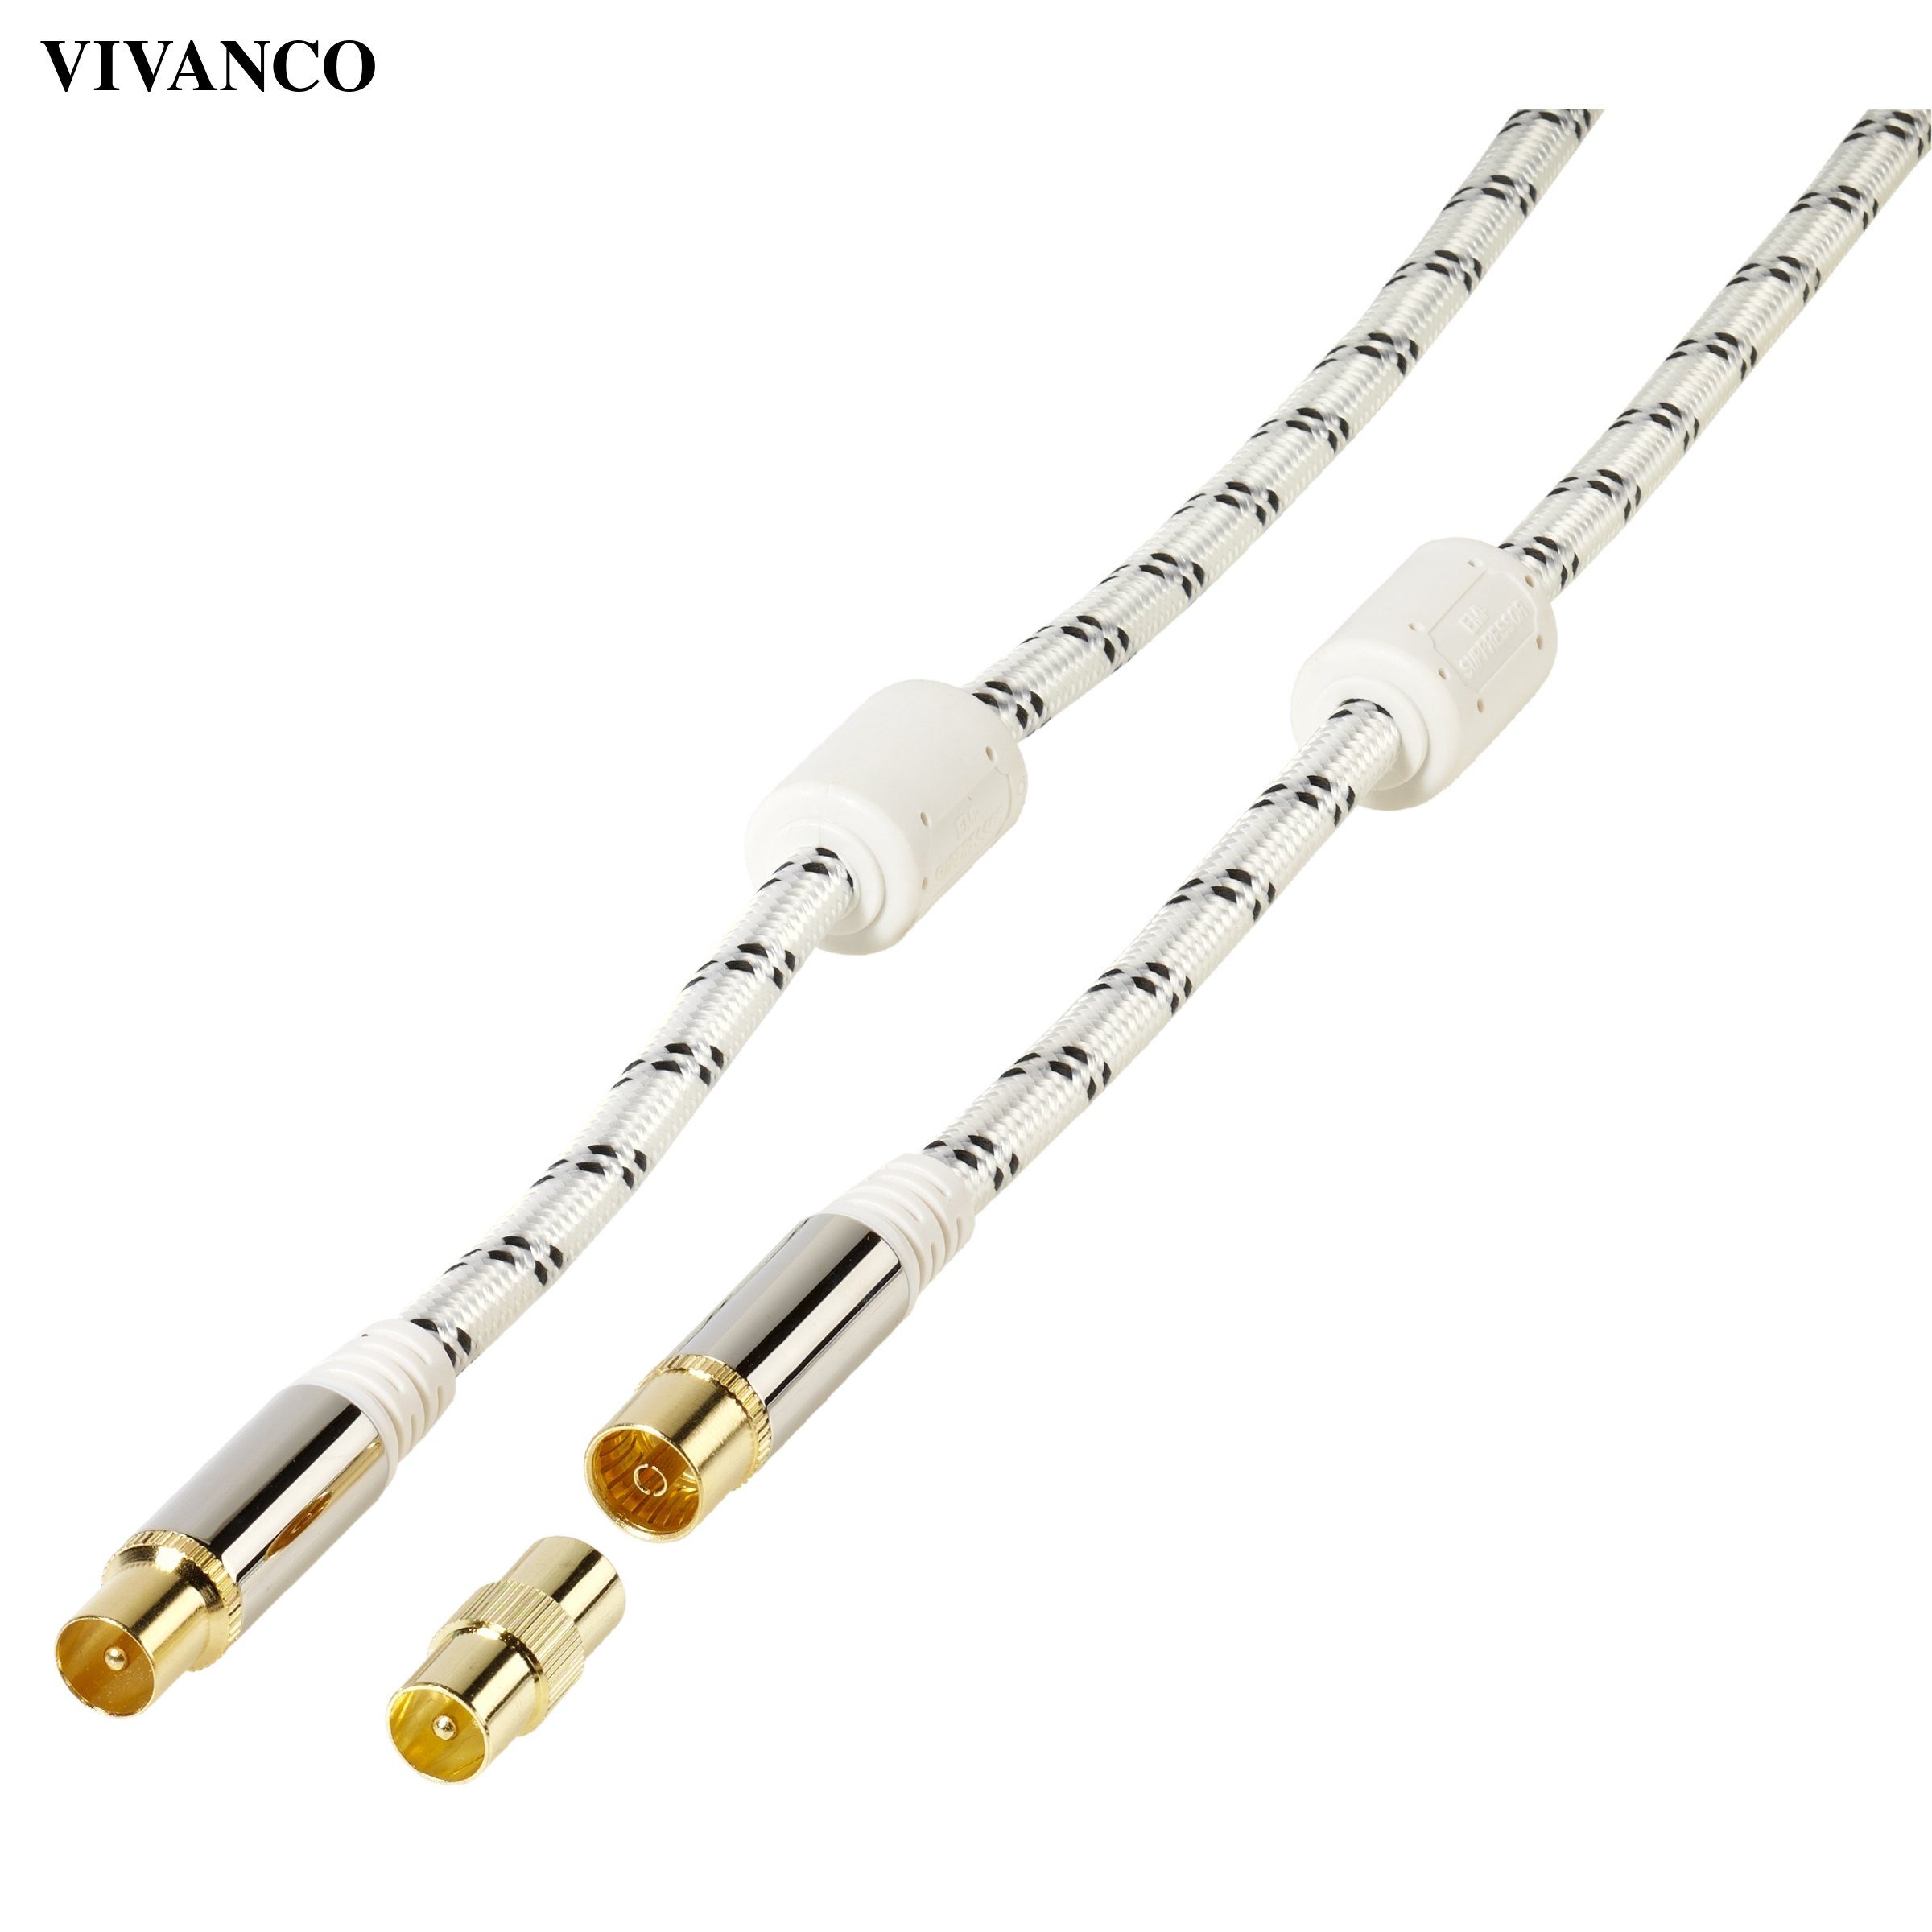 Vivanco Video-Kabel, Antennenkabel, Koaxialkabel